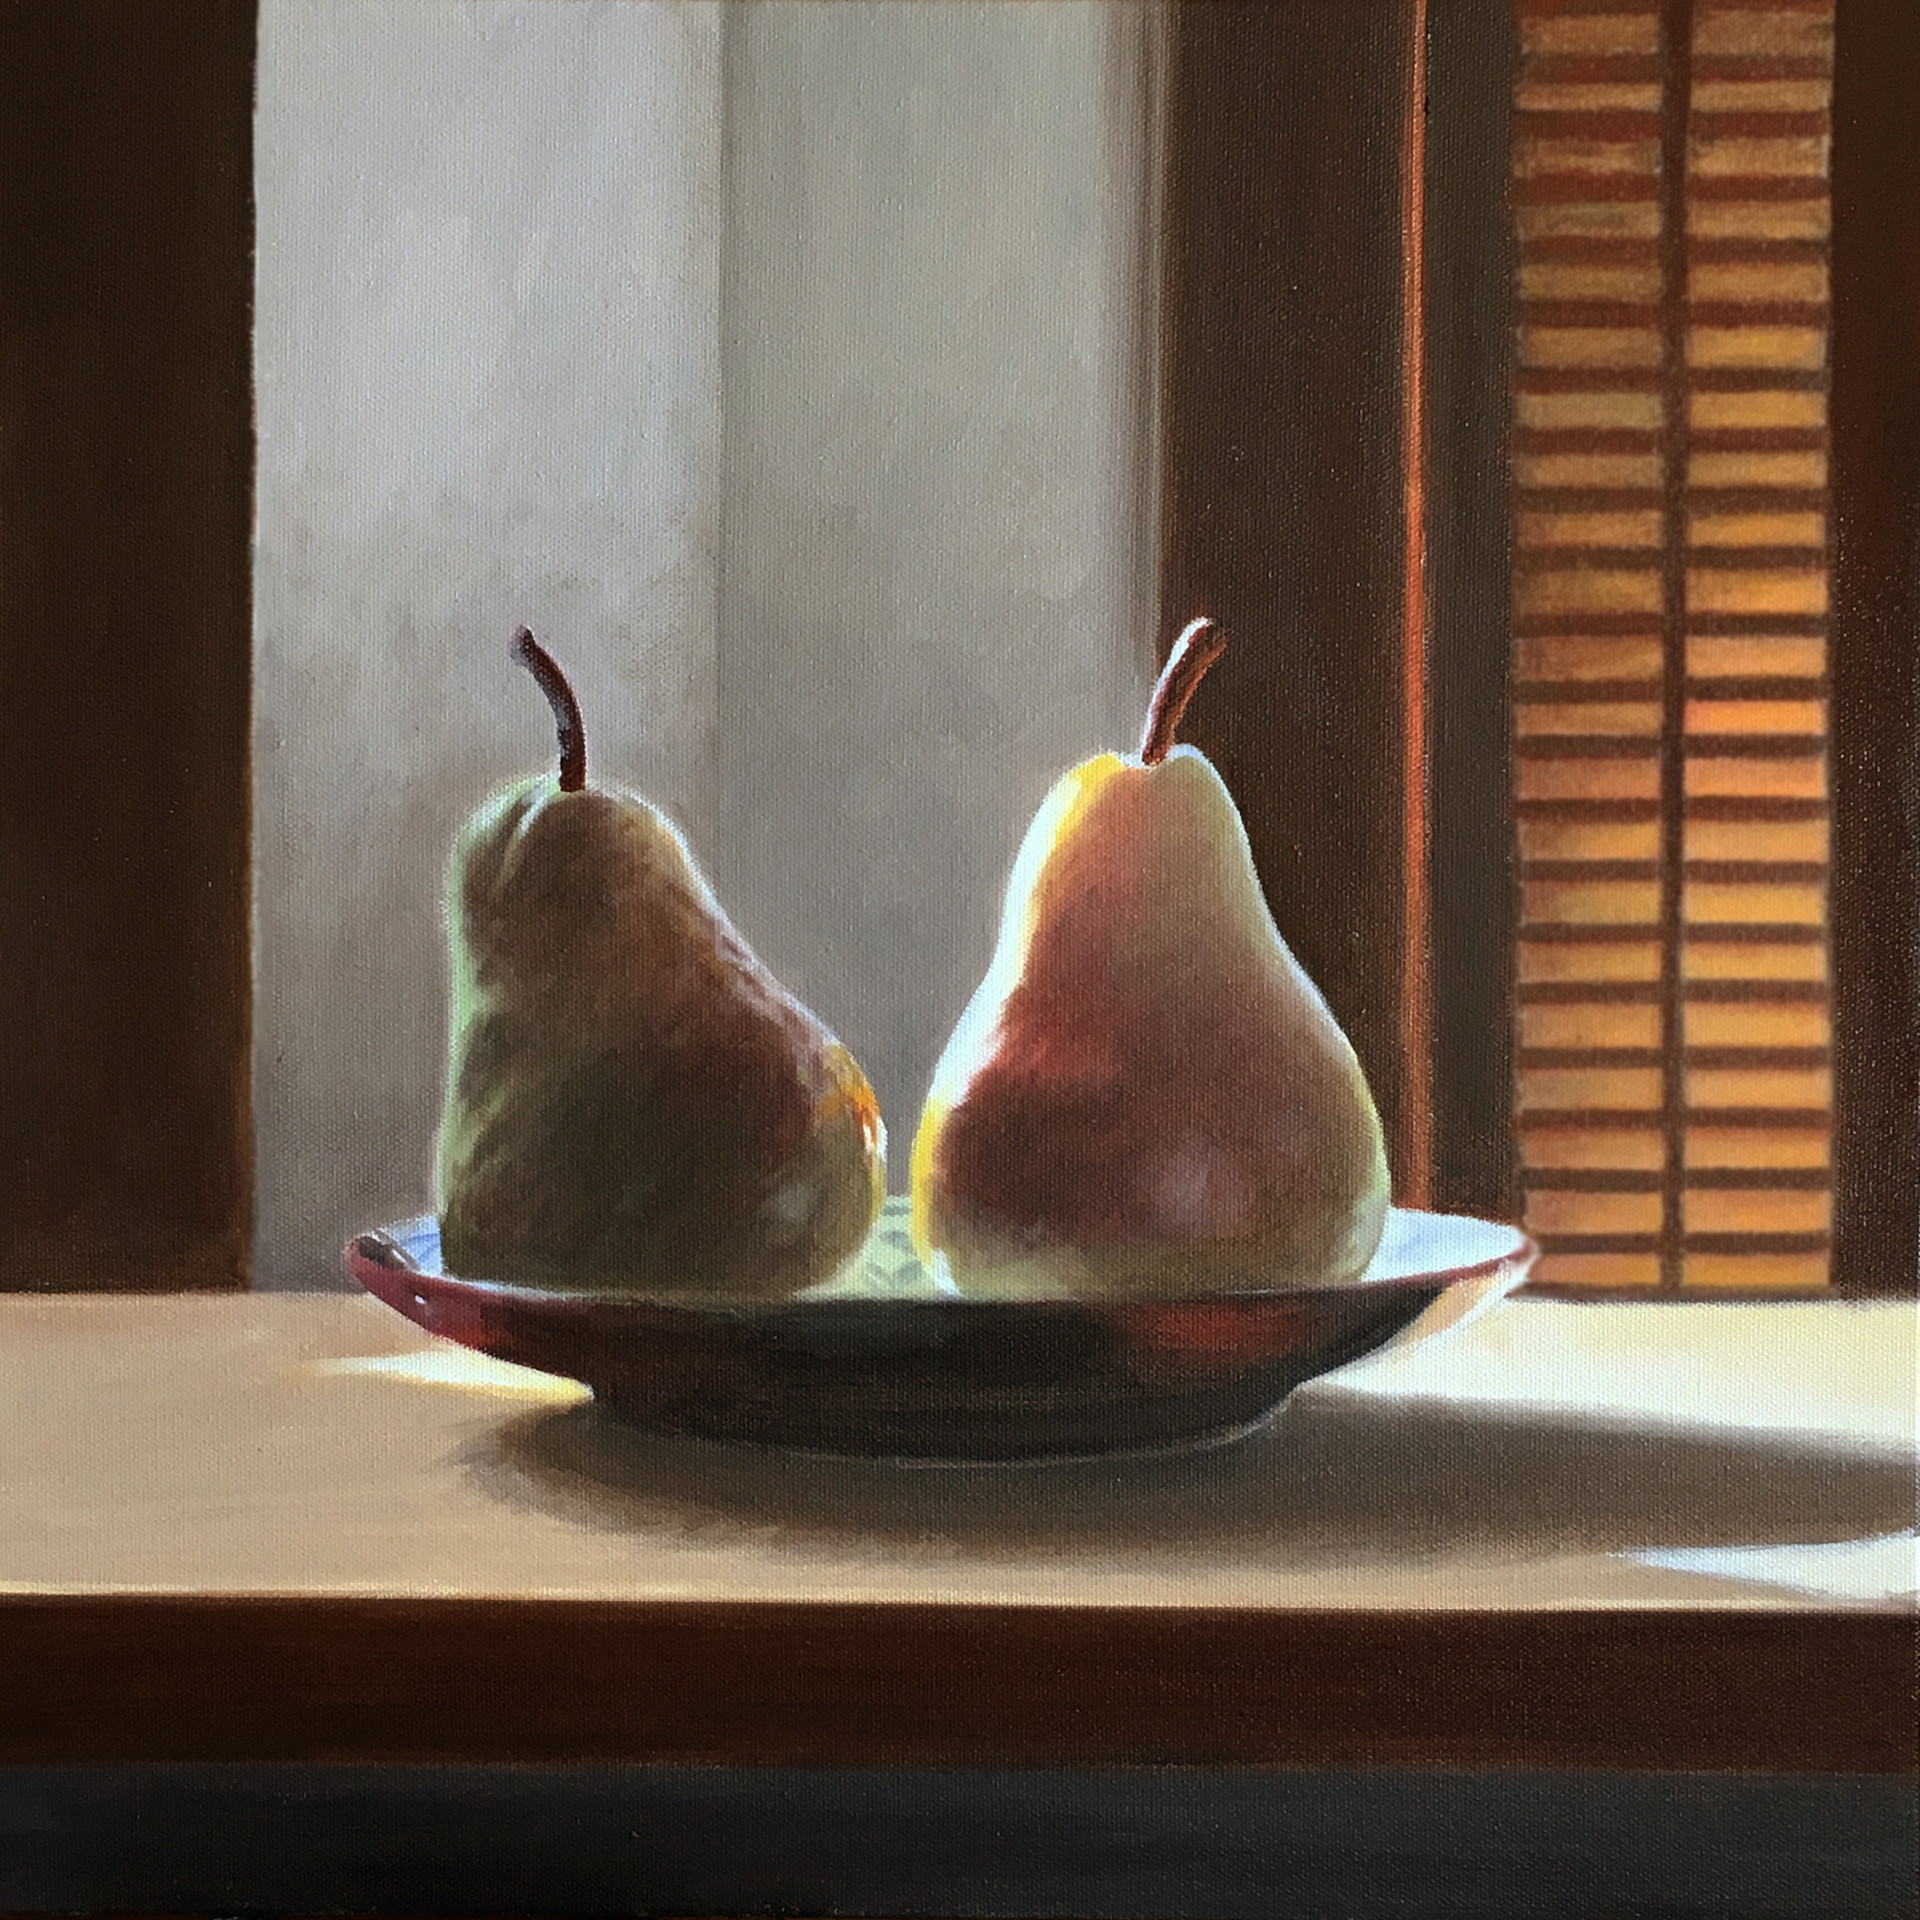 Randall Imai - Two Pears in Sunlight